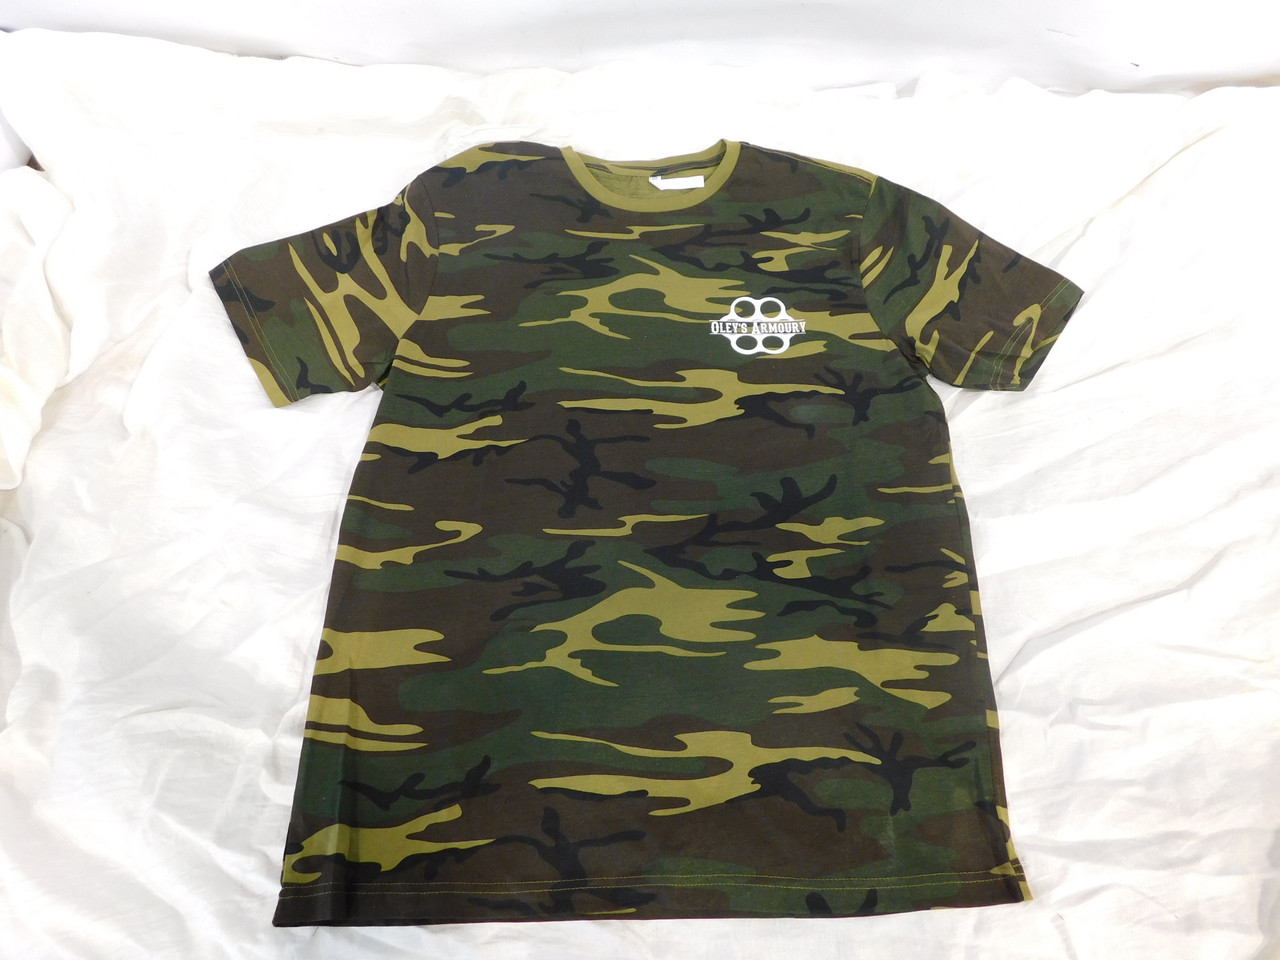 Oley's Armoury T-Shirt Camo - Large